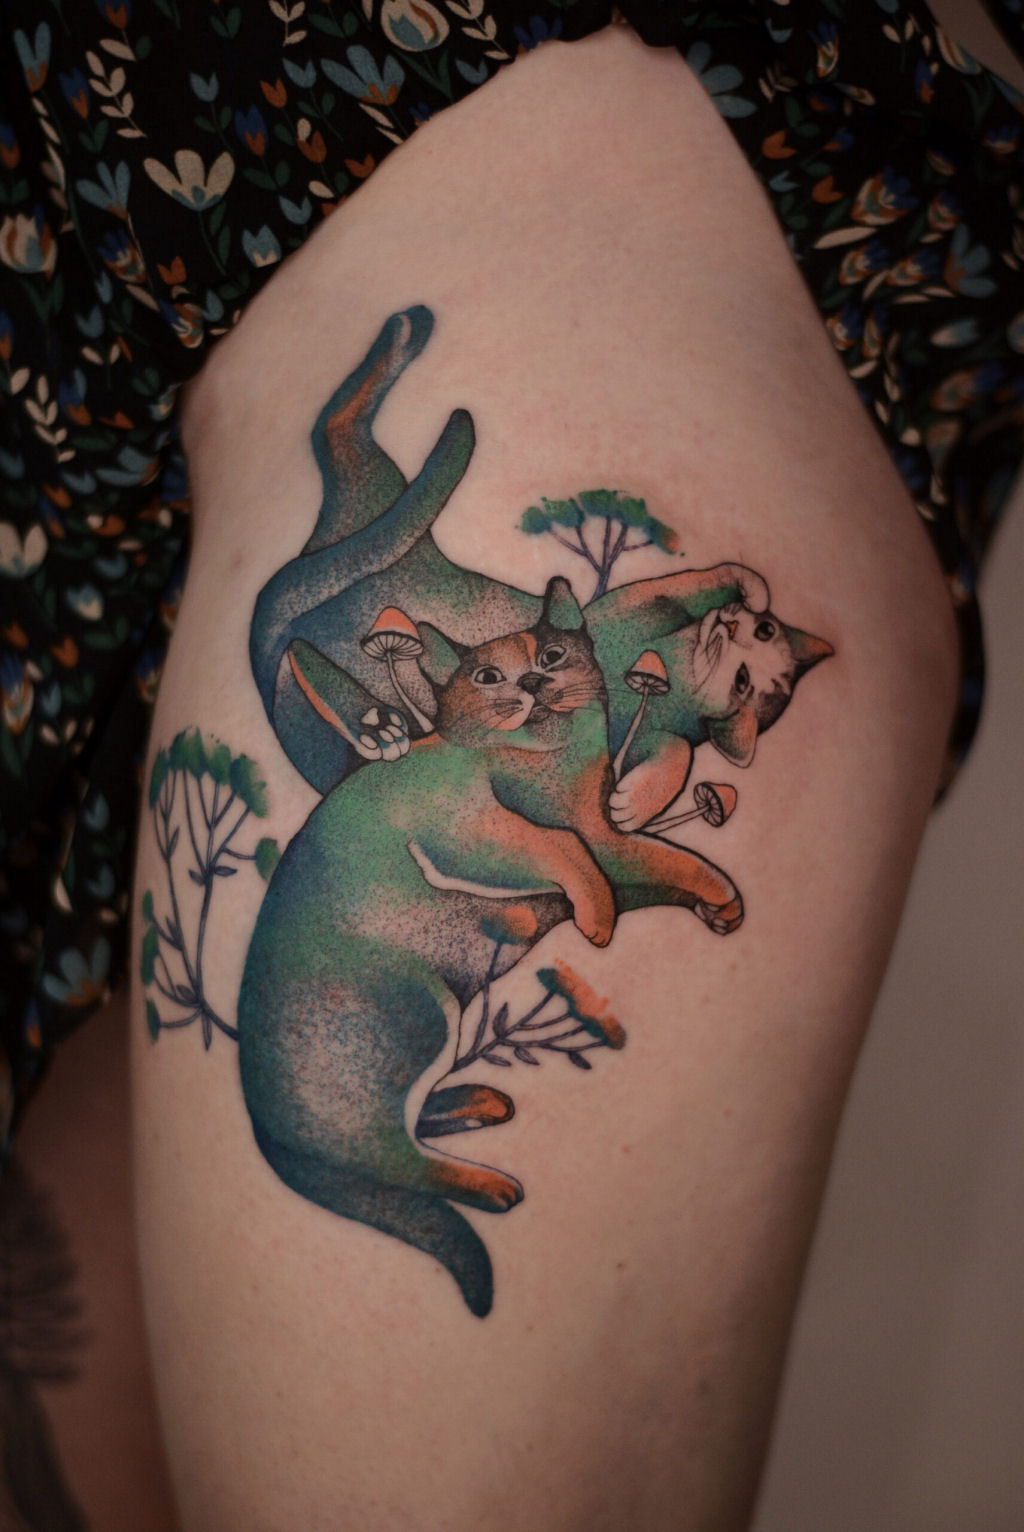 Tatuagens finamente delineadas combinam flora e fauna de forma delicada 08